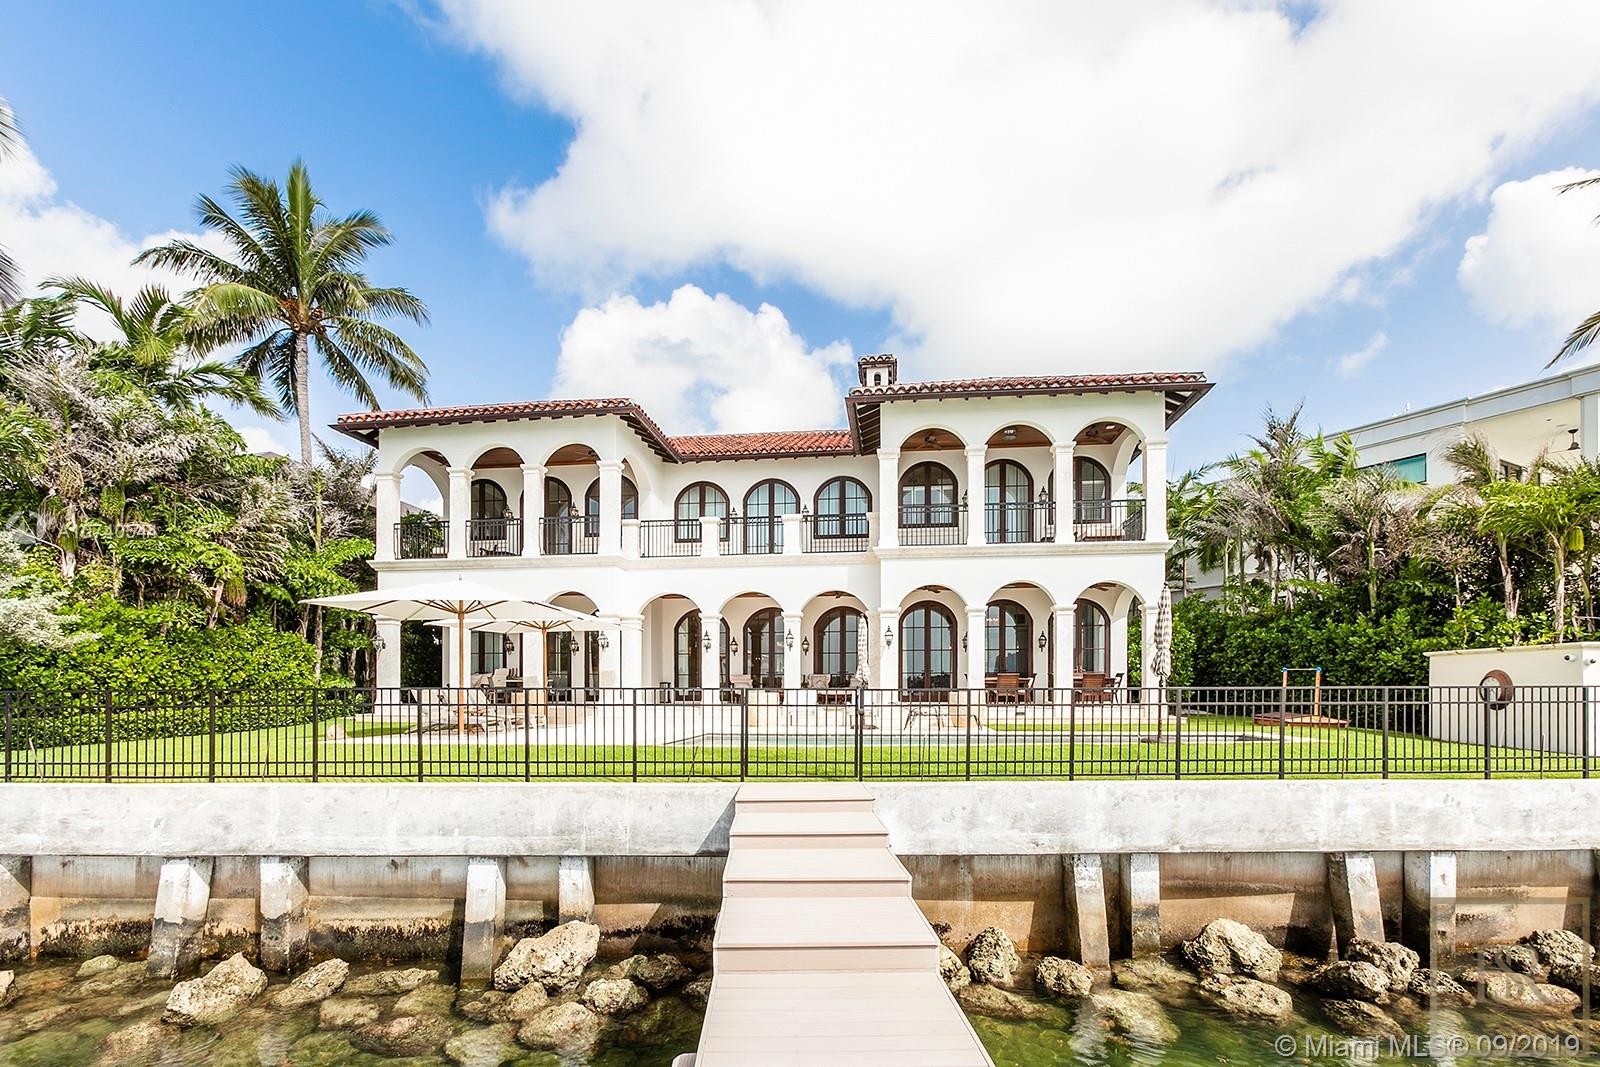 House 27 E Dilido Dr - Miami Beach, USA for sale For Super Rich